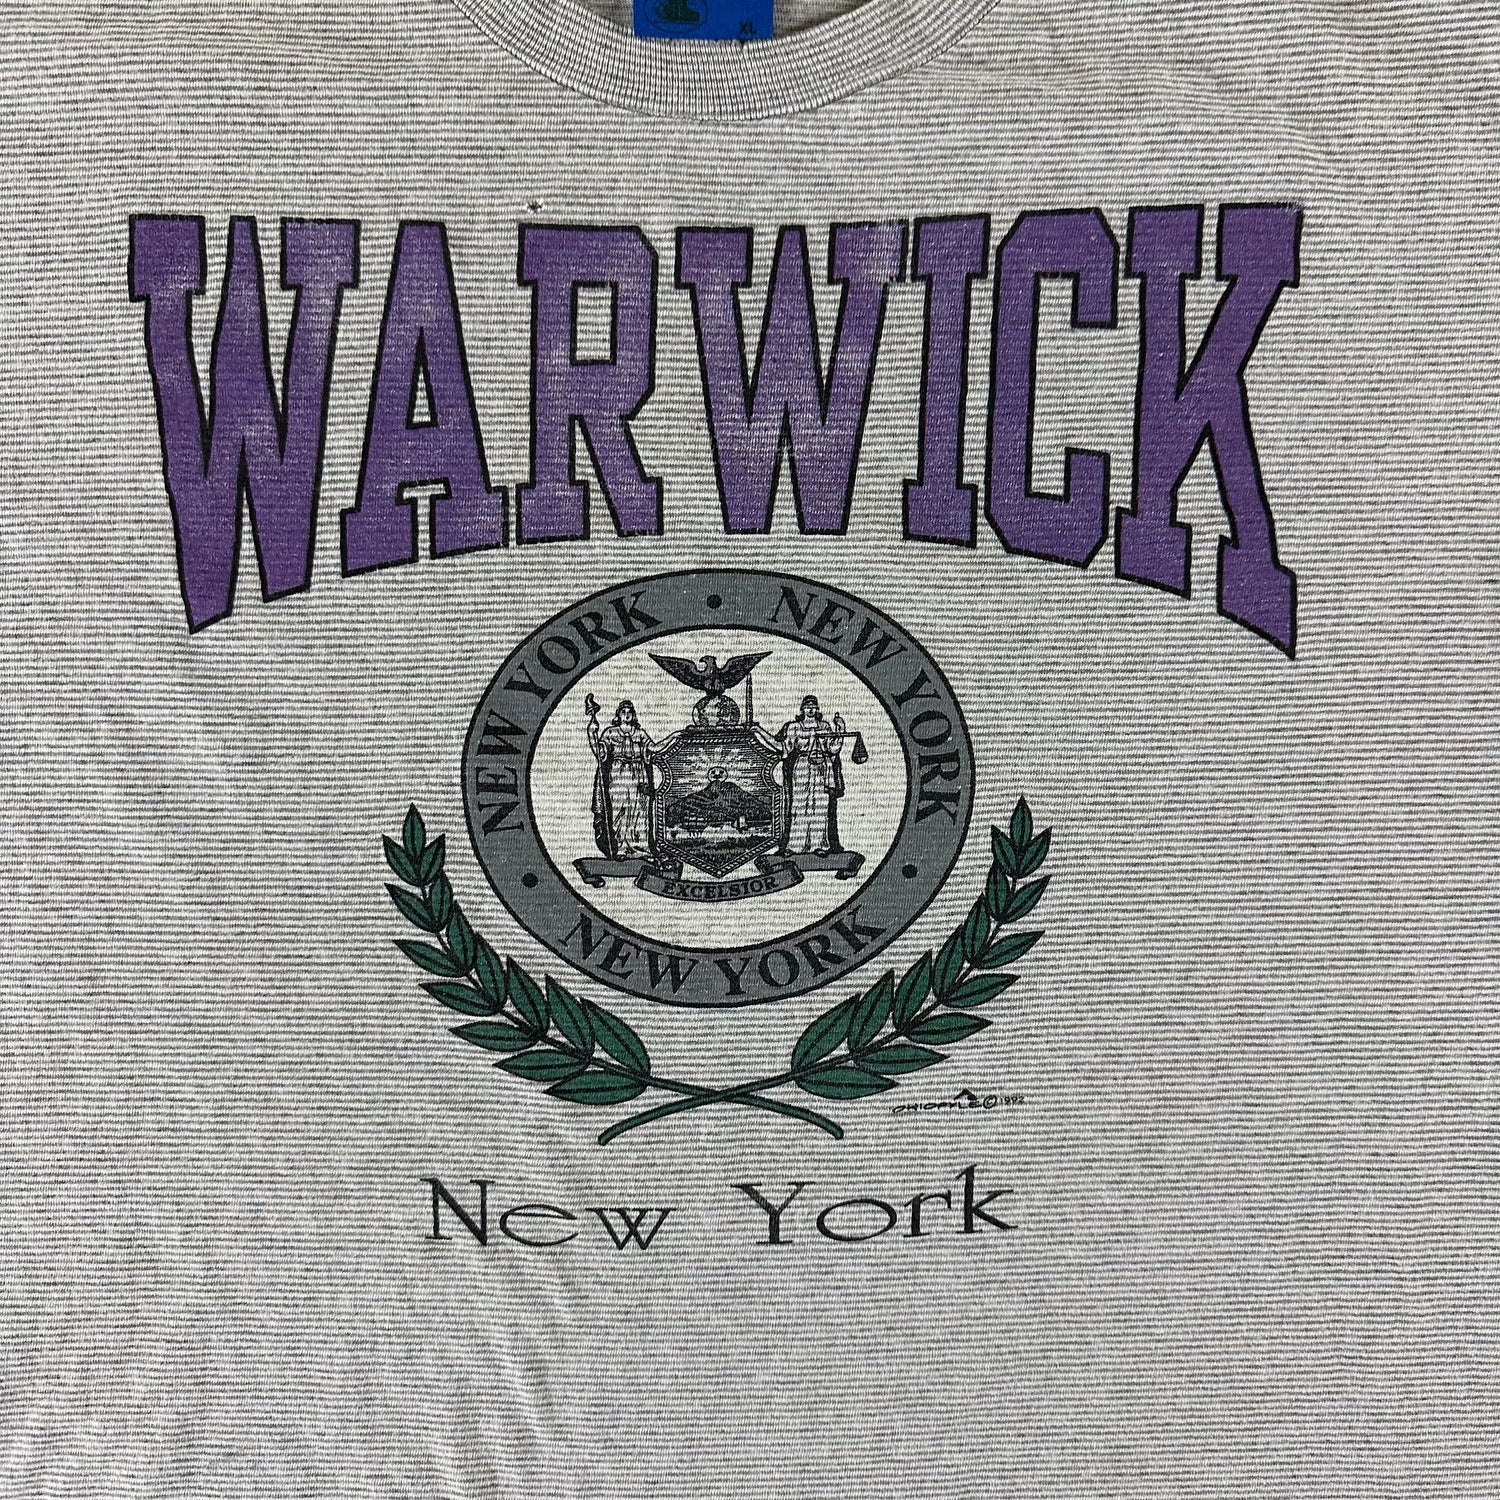 Vintage 1990s New York T-shirt size XL